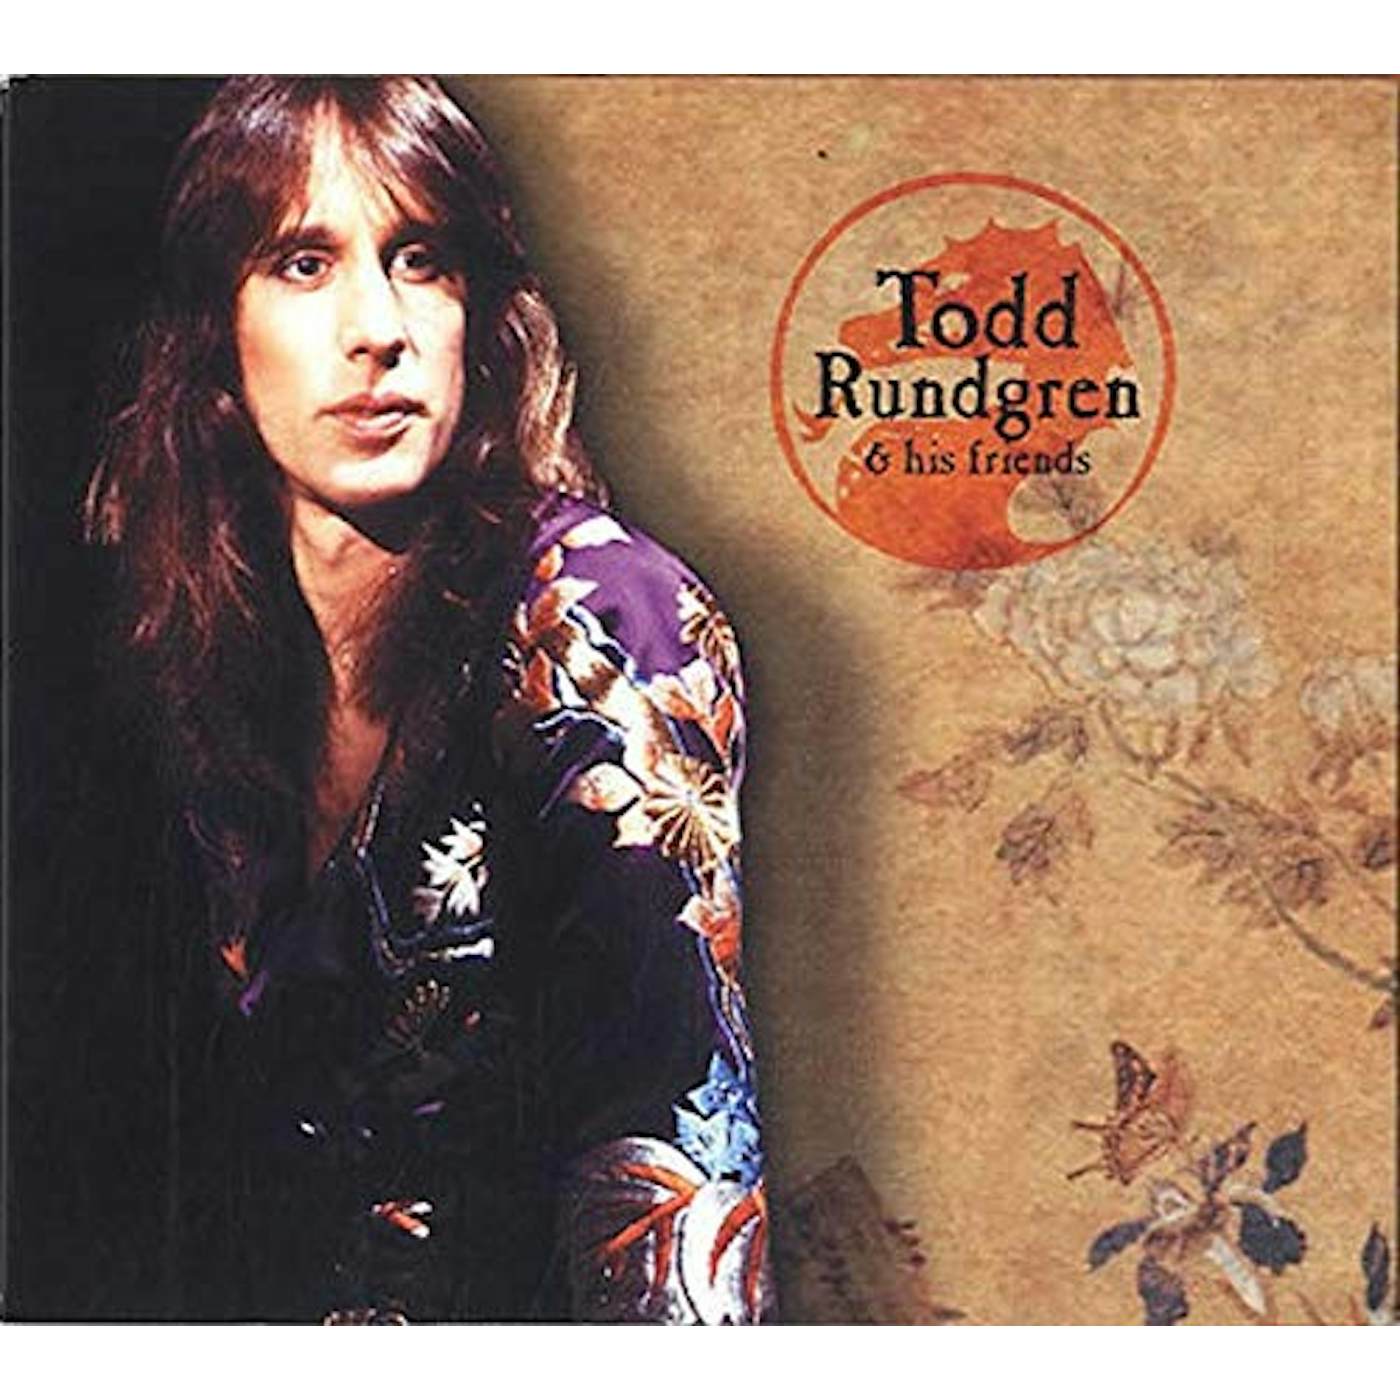 TODD RUNDGREN & FRIENDS (PURPLE) Vinyl Record